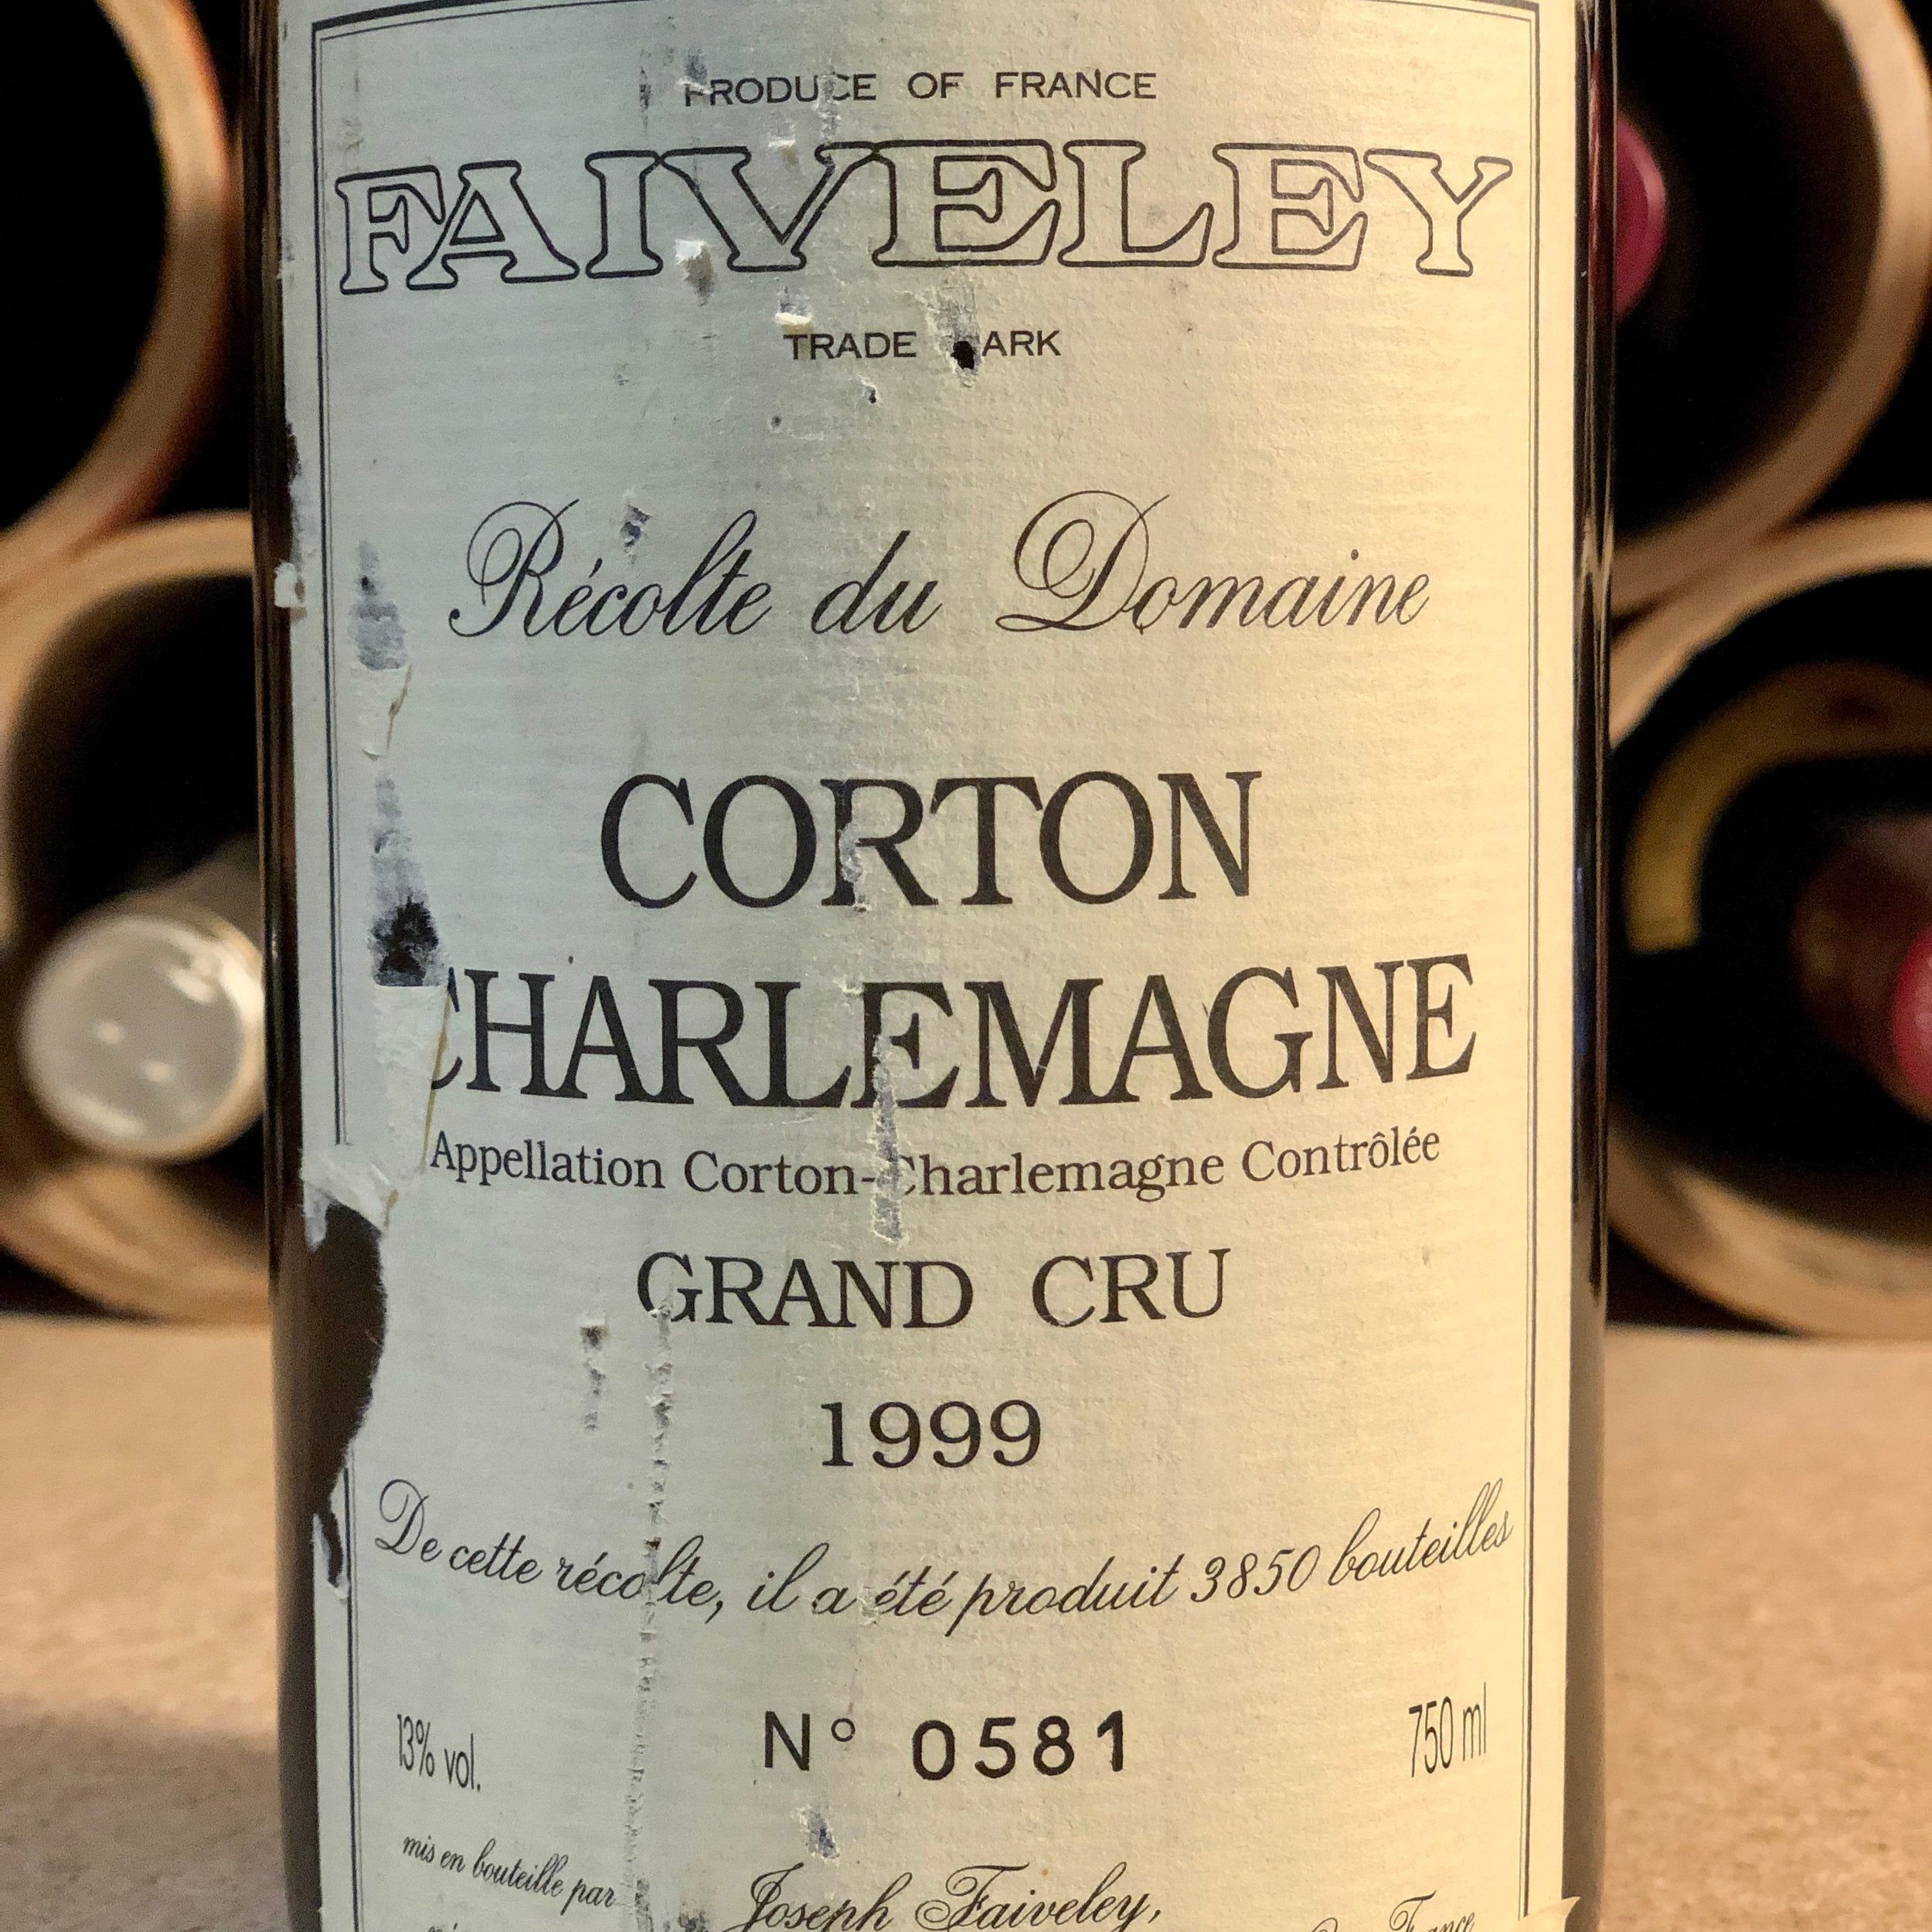 FAIVELEY, CORTON CHARLEMAGNE 1999